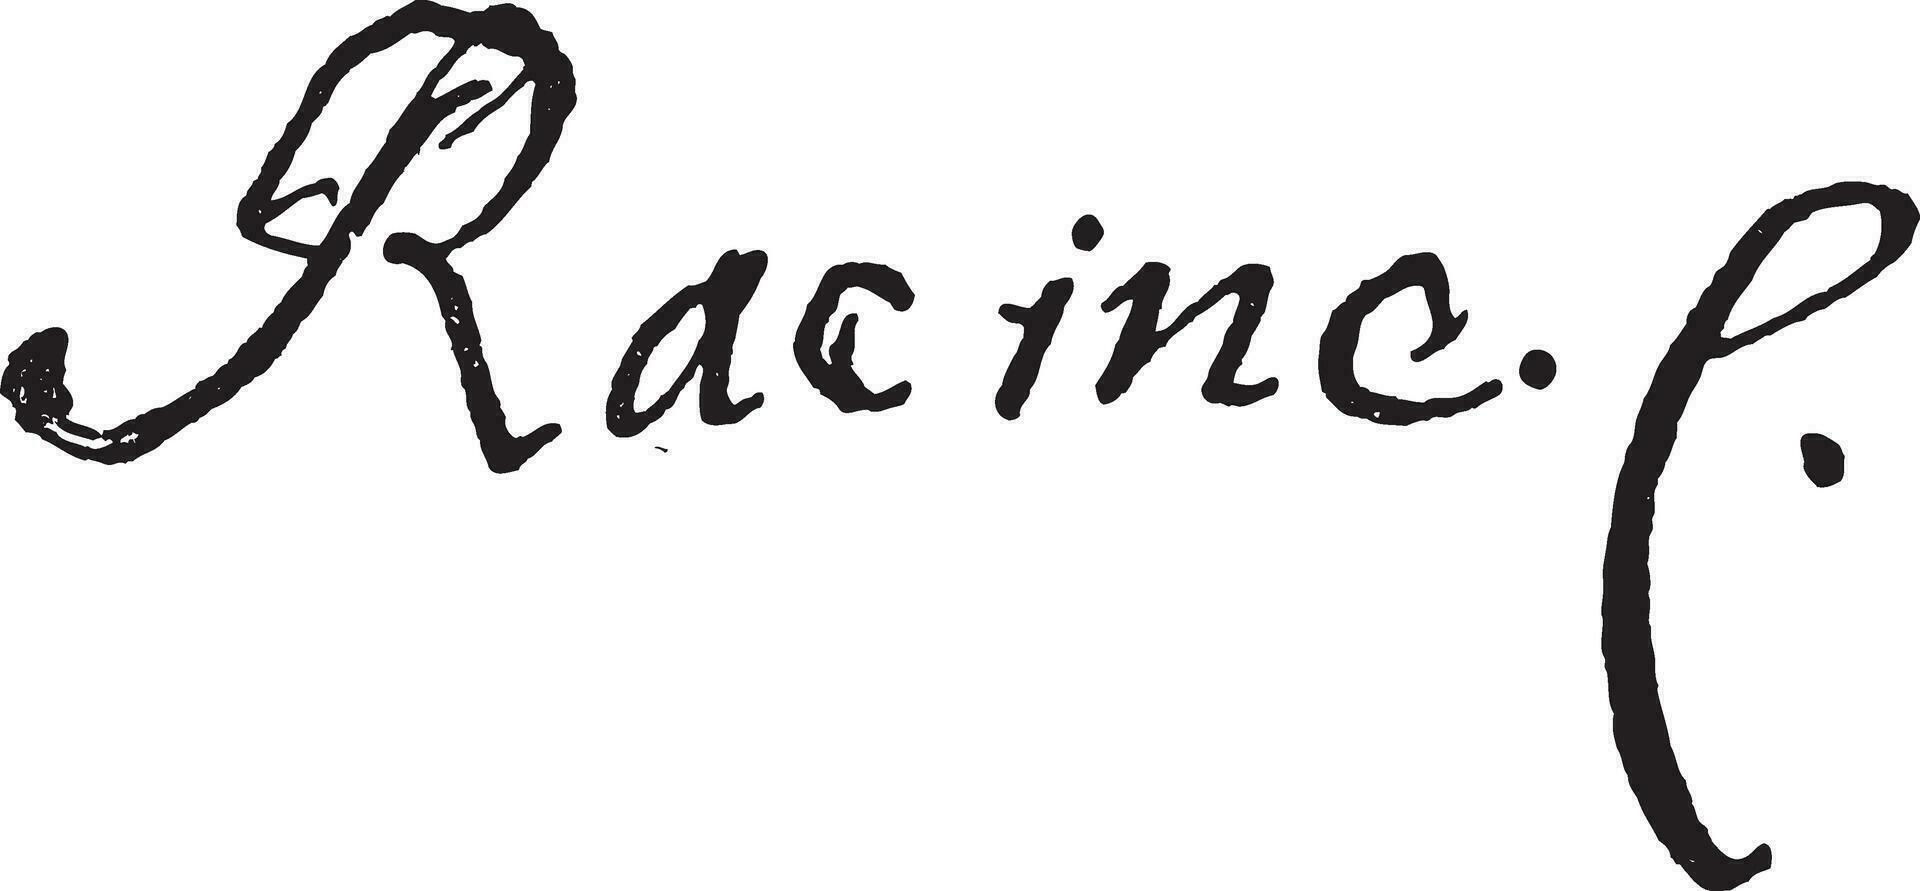 Signature de jean racine 1639-1699, ancien gravure. vecteur